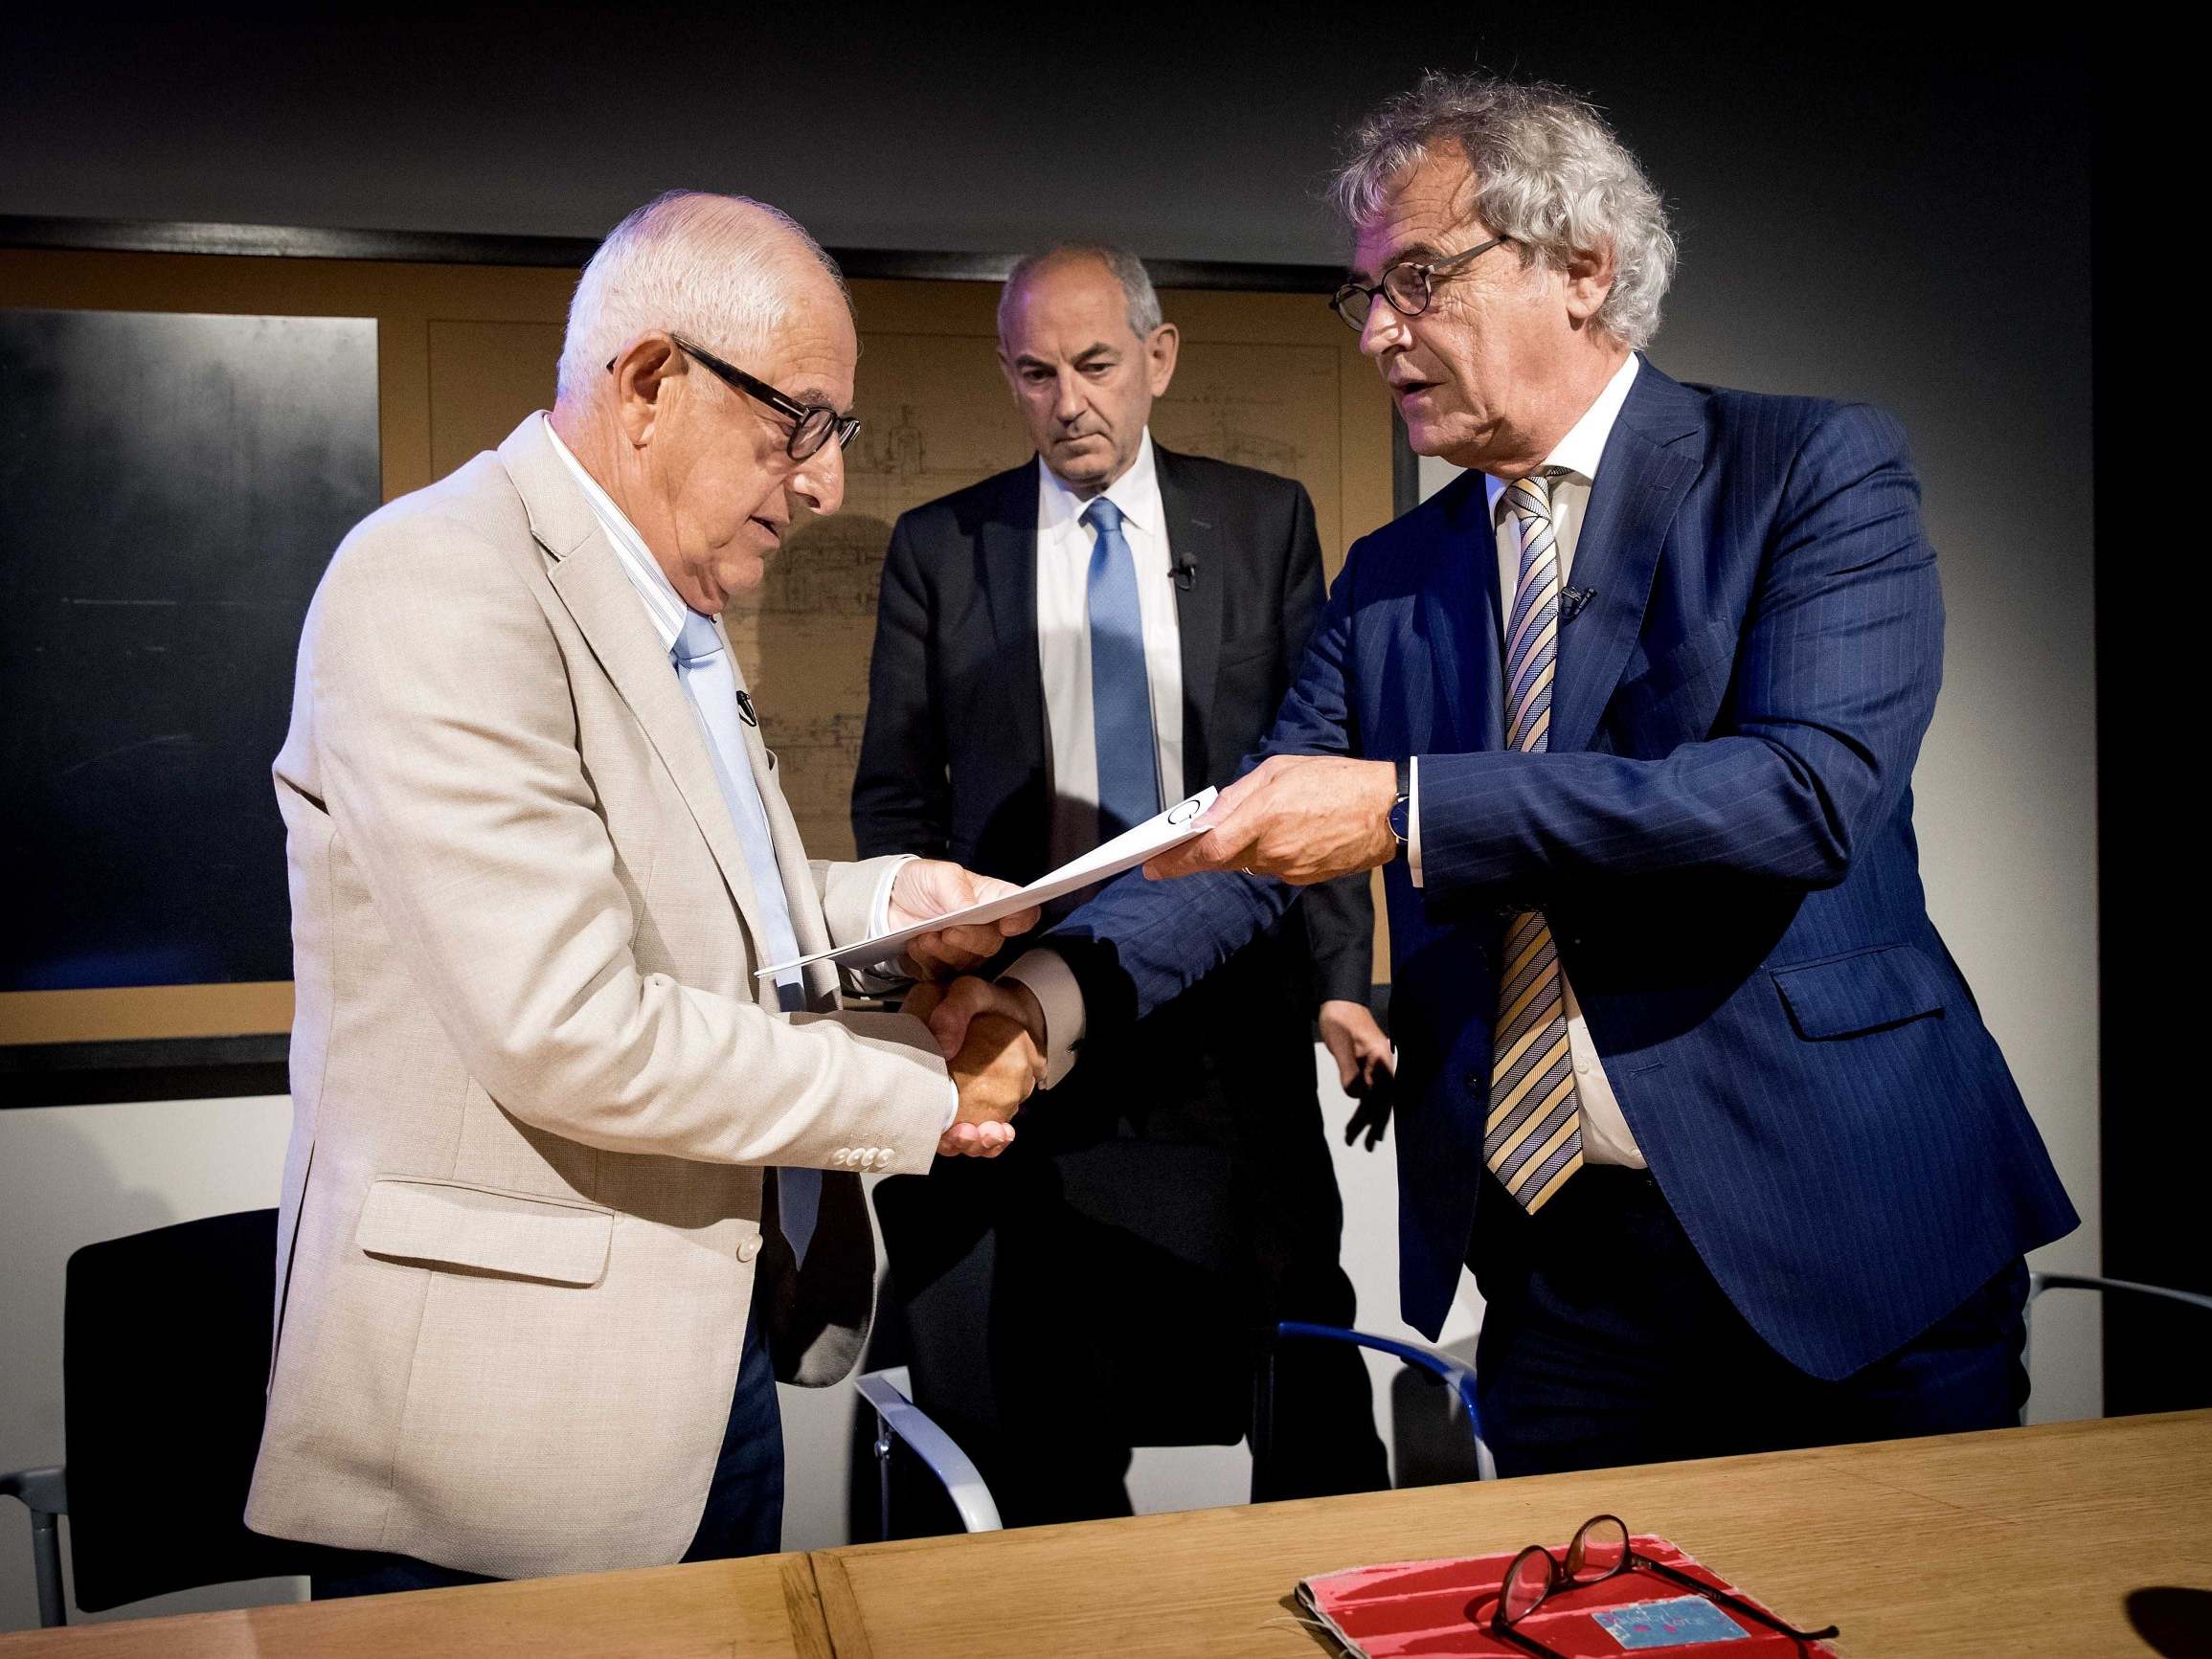 Holocaust survivor Salo Muller receives agreement from NS director Roger van Boxtel